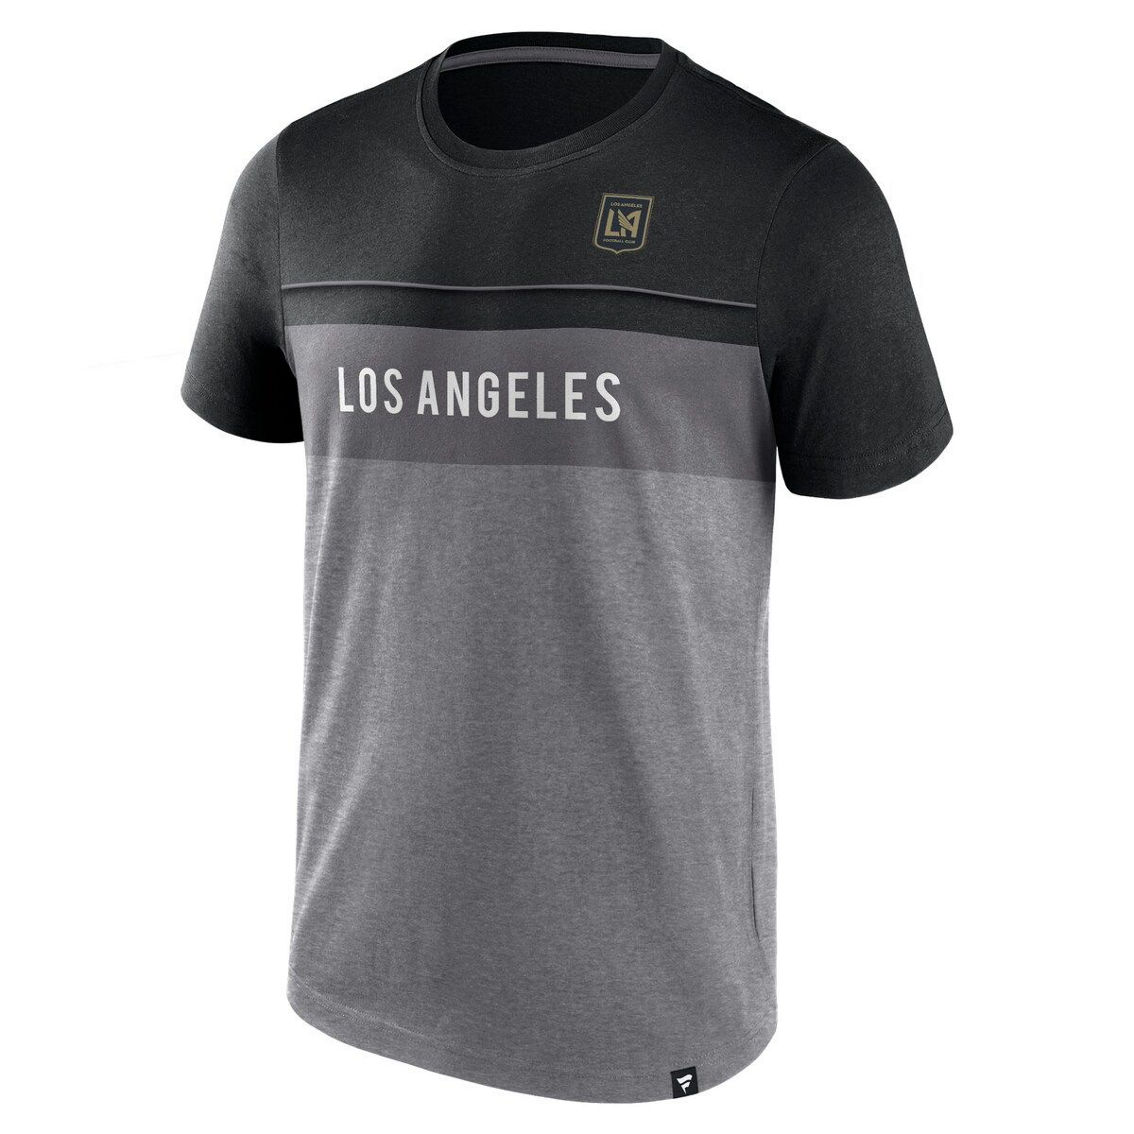 Fanatics Branded Men's Black/Gray LAFC Striking Distance T-Shirt - Image 3 of 4